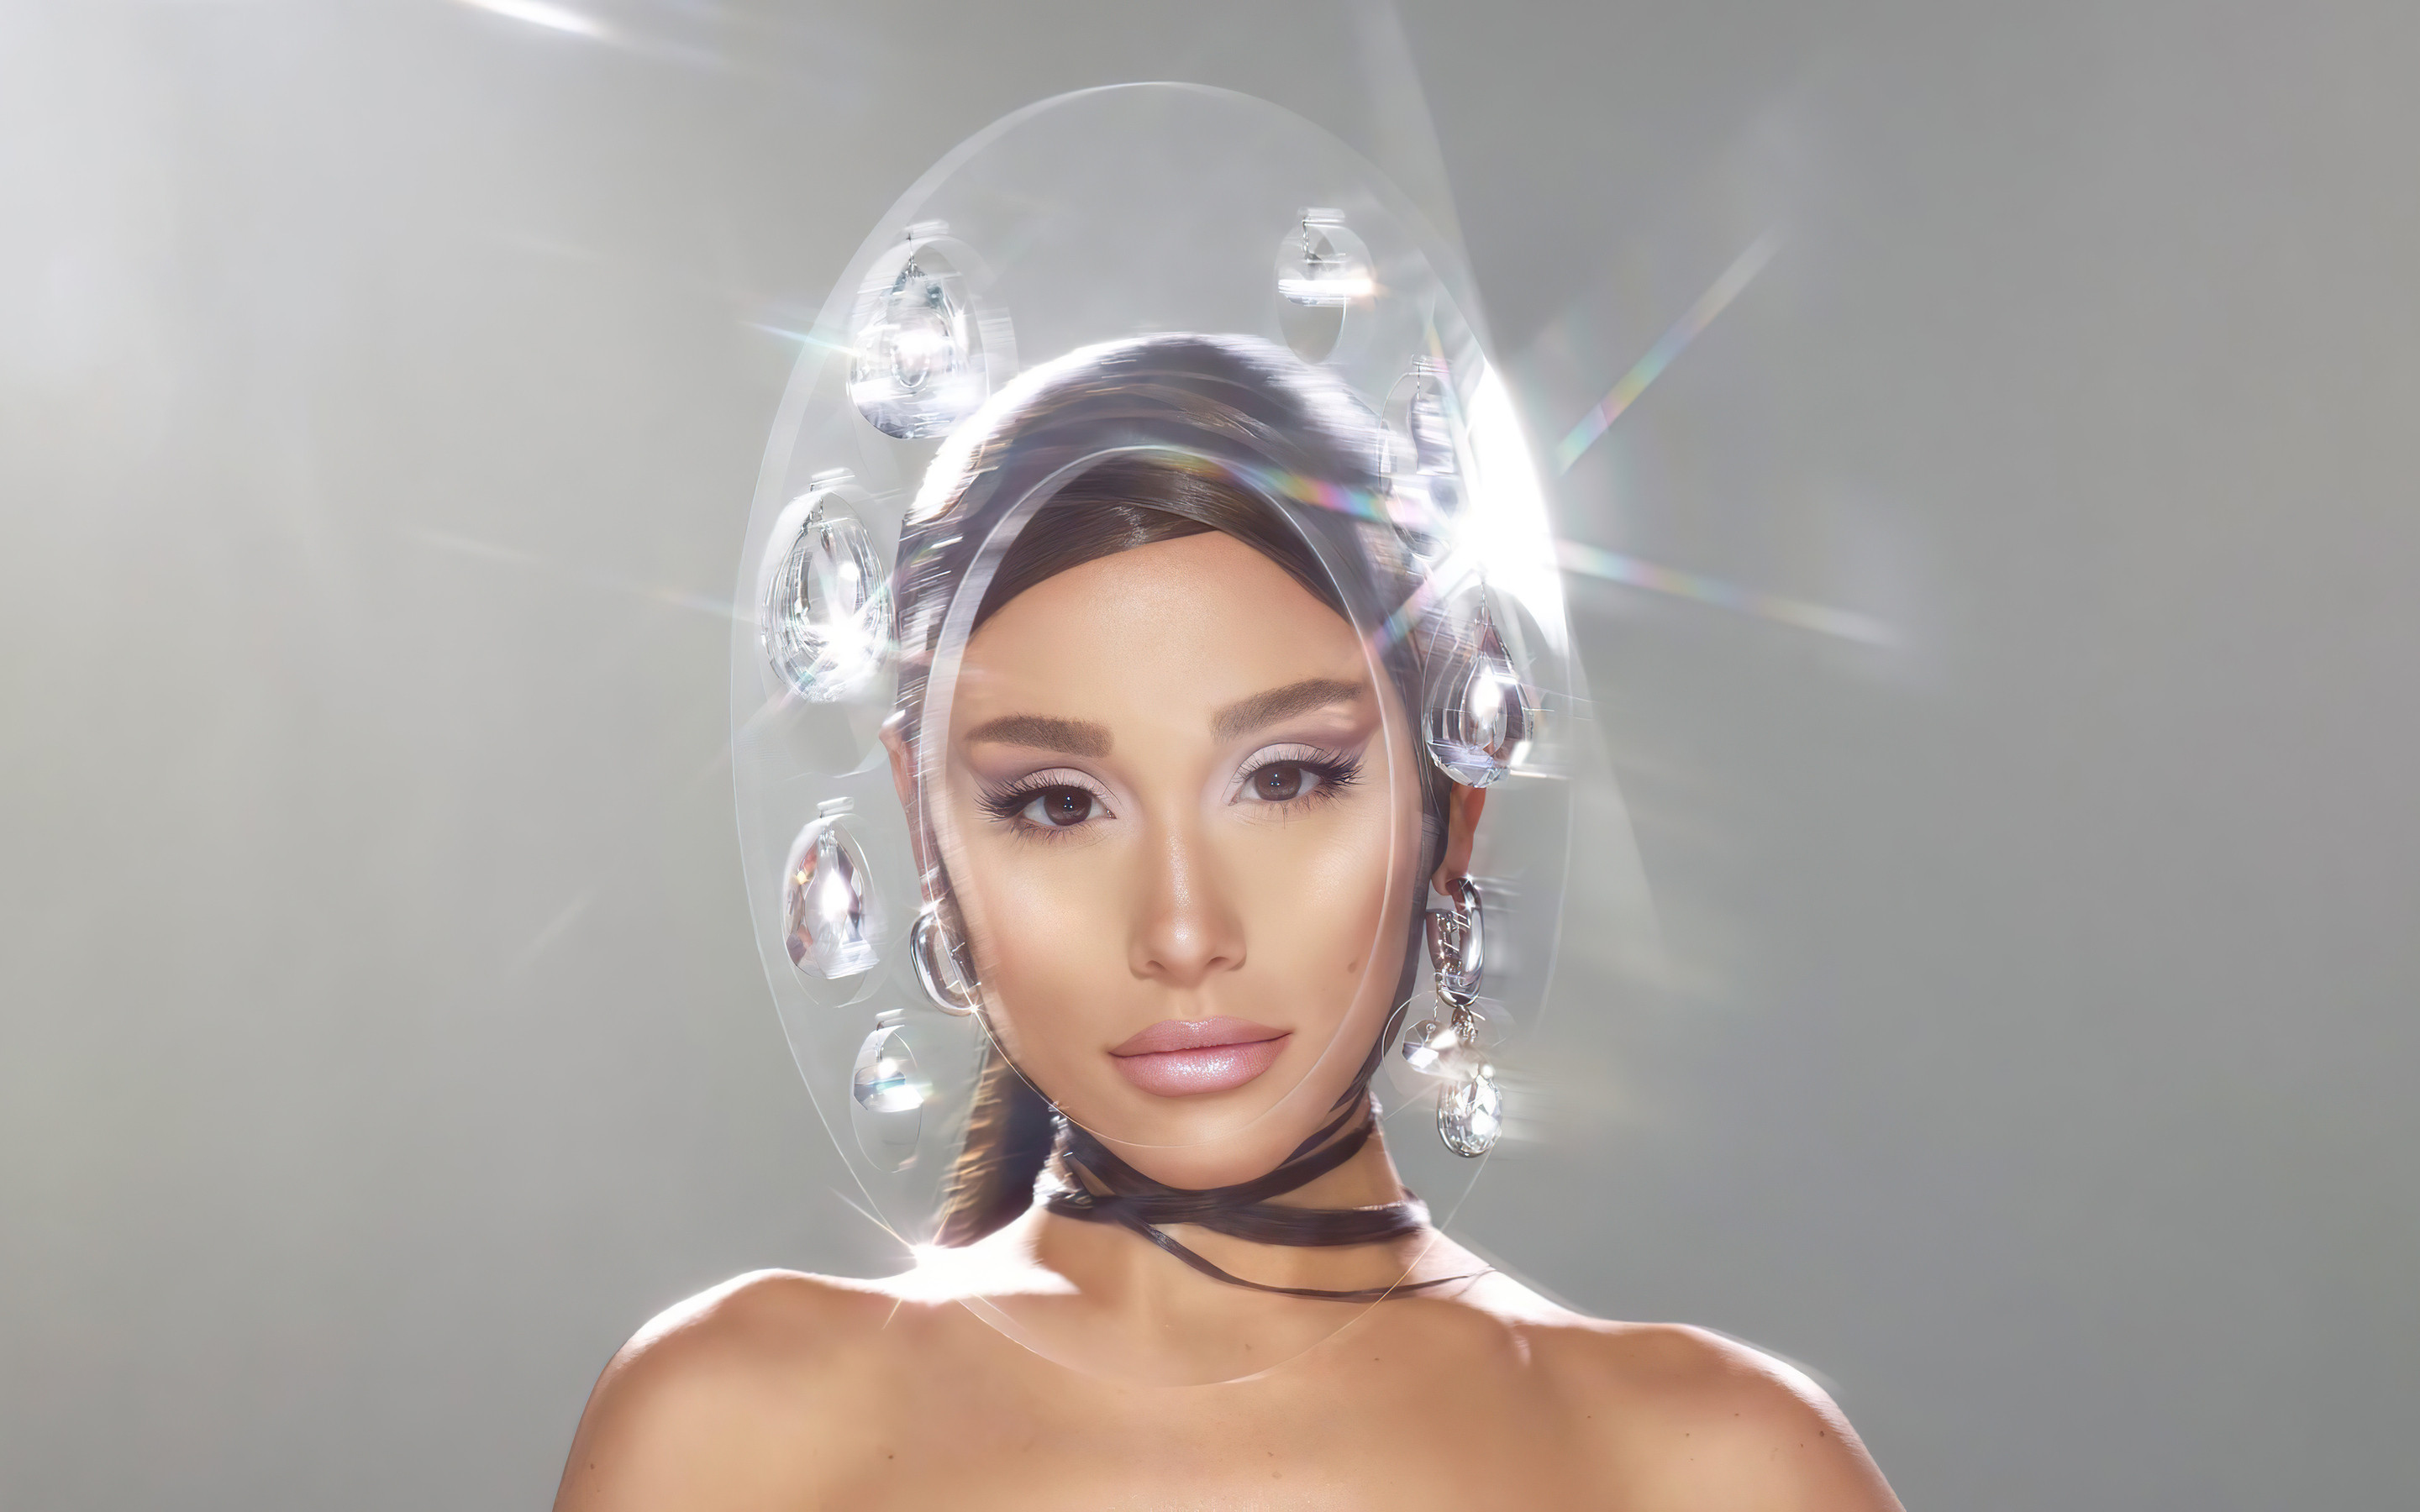 A woman wearing an acrylic headpiece - Ariana Grande